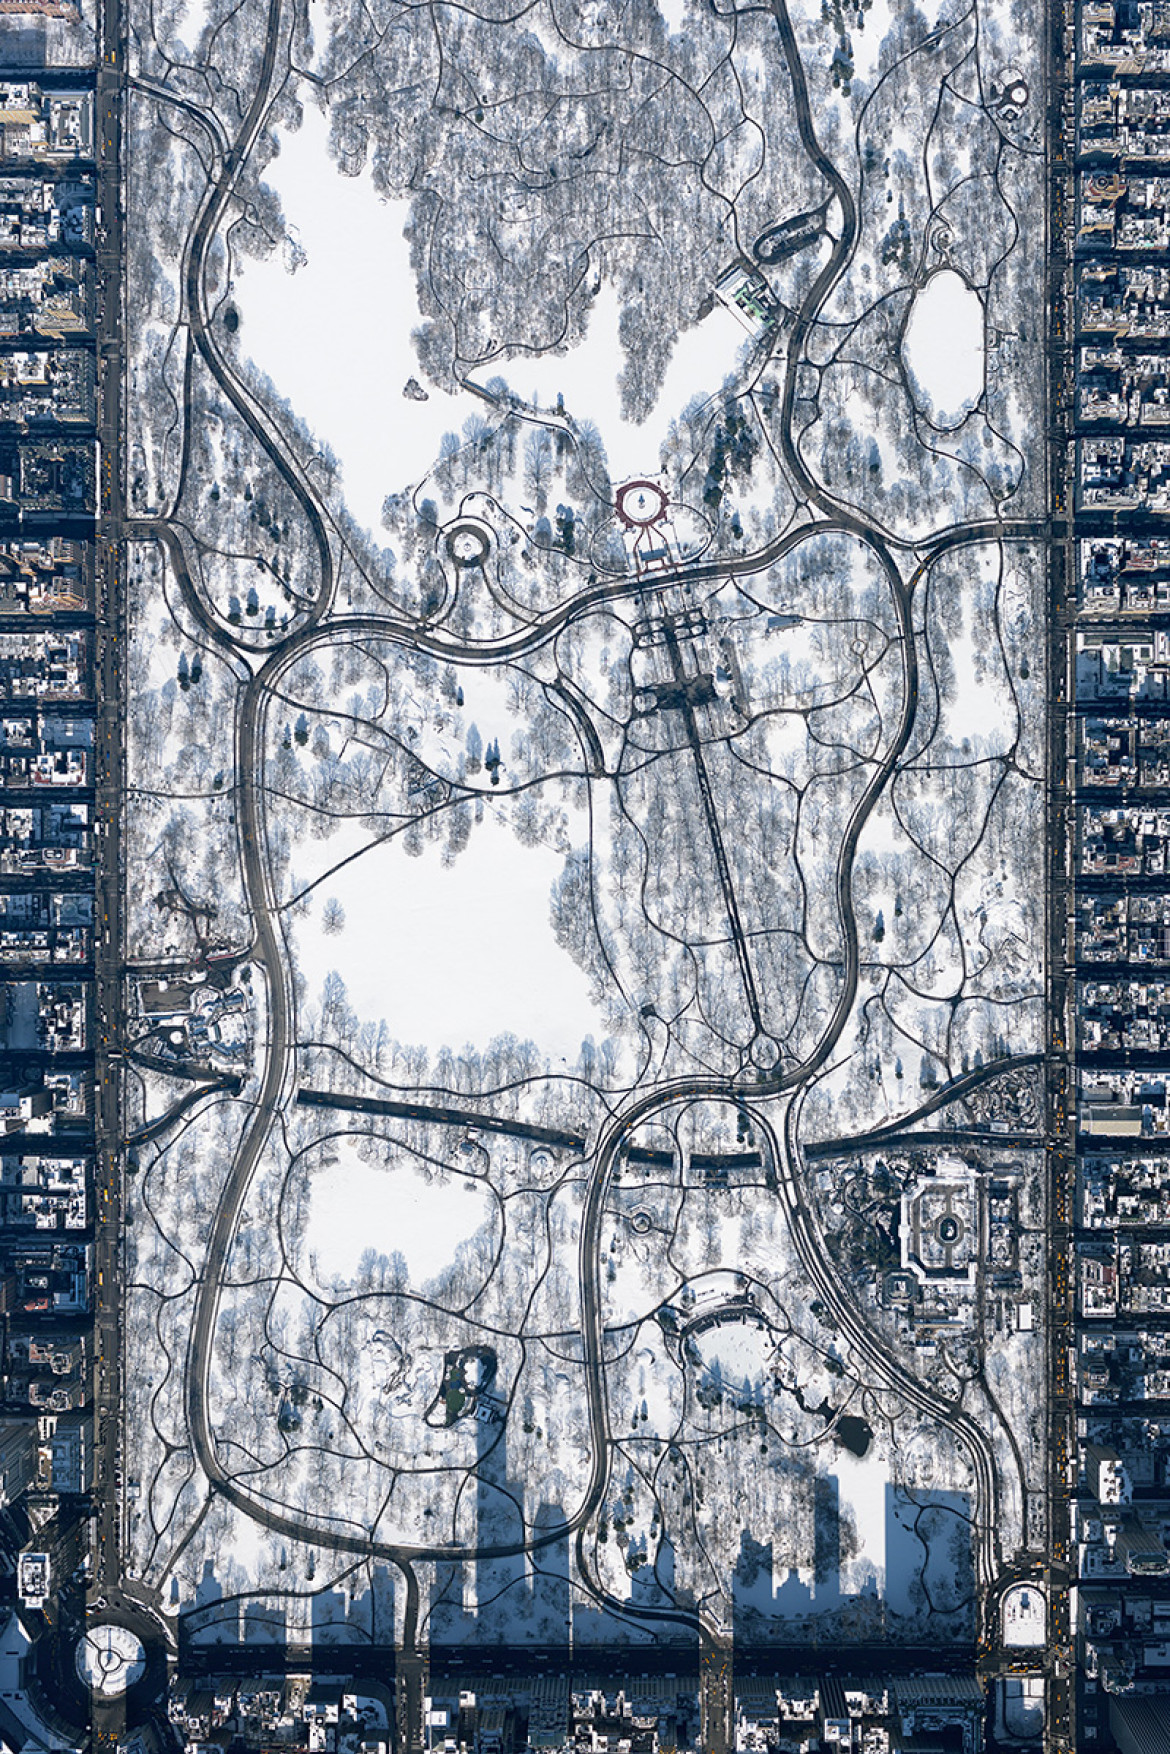 fot. Filip Wolak, 
Central Park at 10,000 feet, 1. miejsce w profesjonalnej kategorii Cityscapes